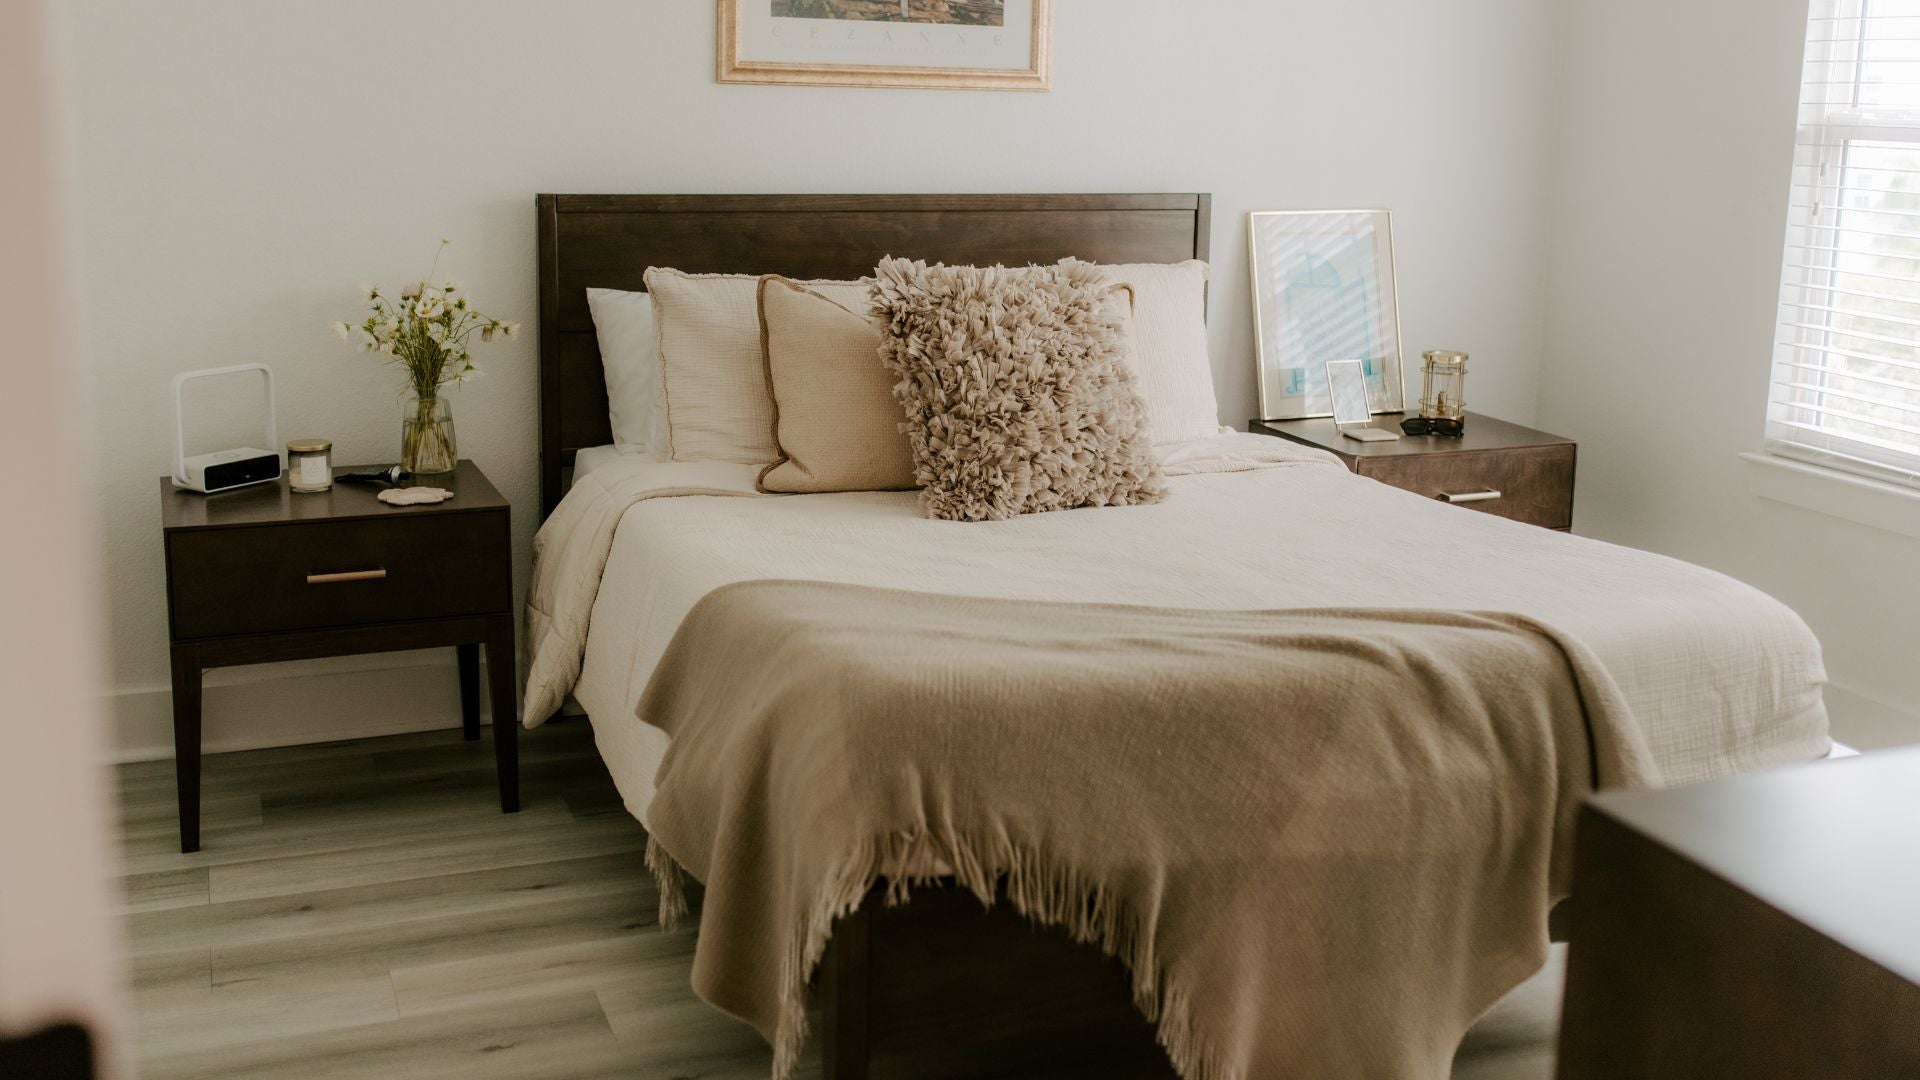 walnut bedroom set with two solid wood nightstands